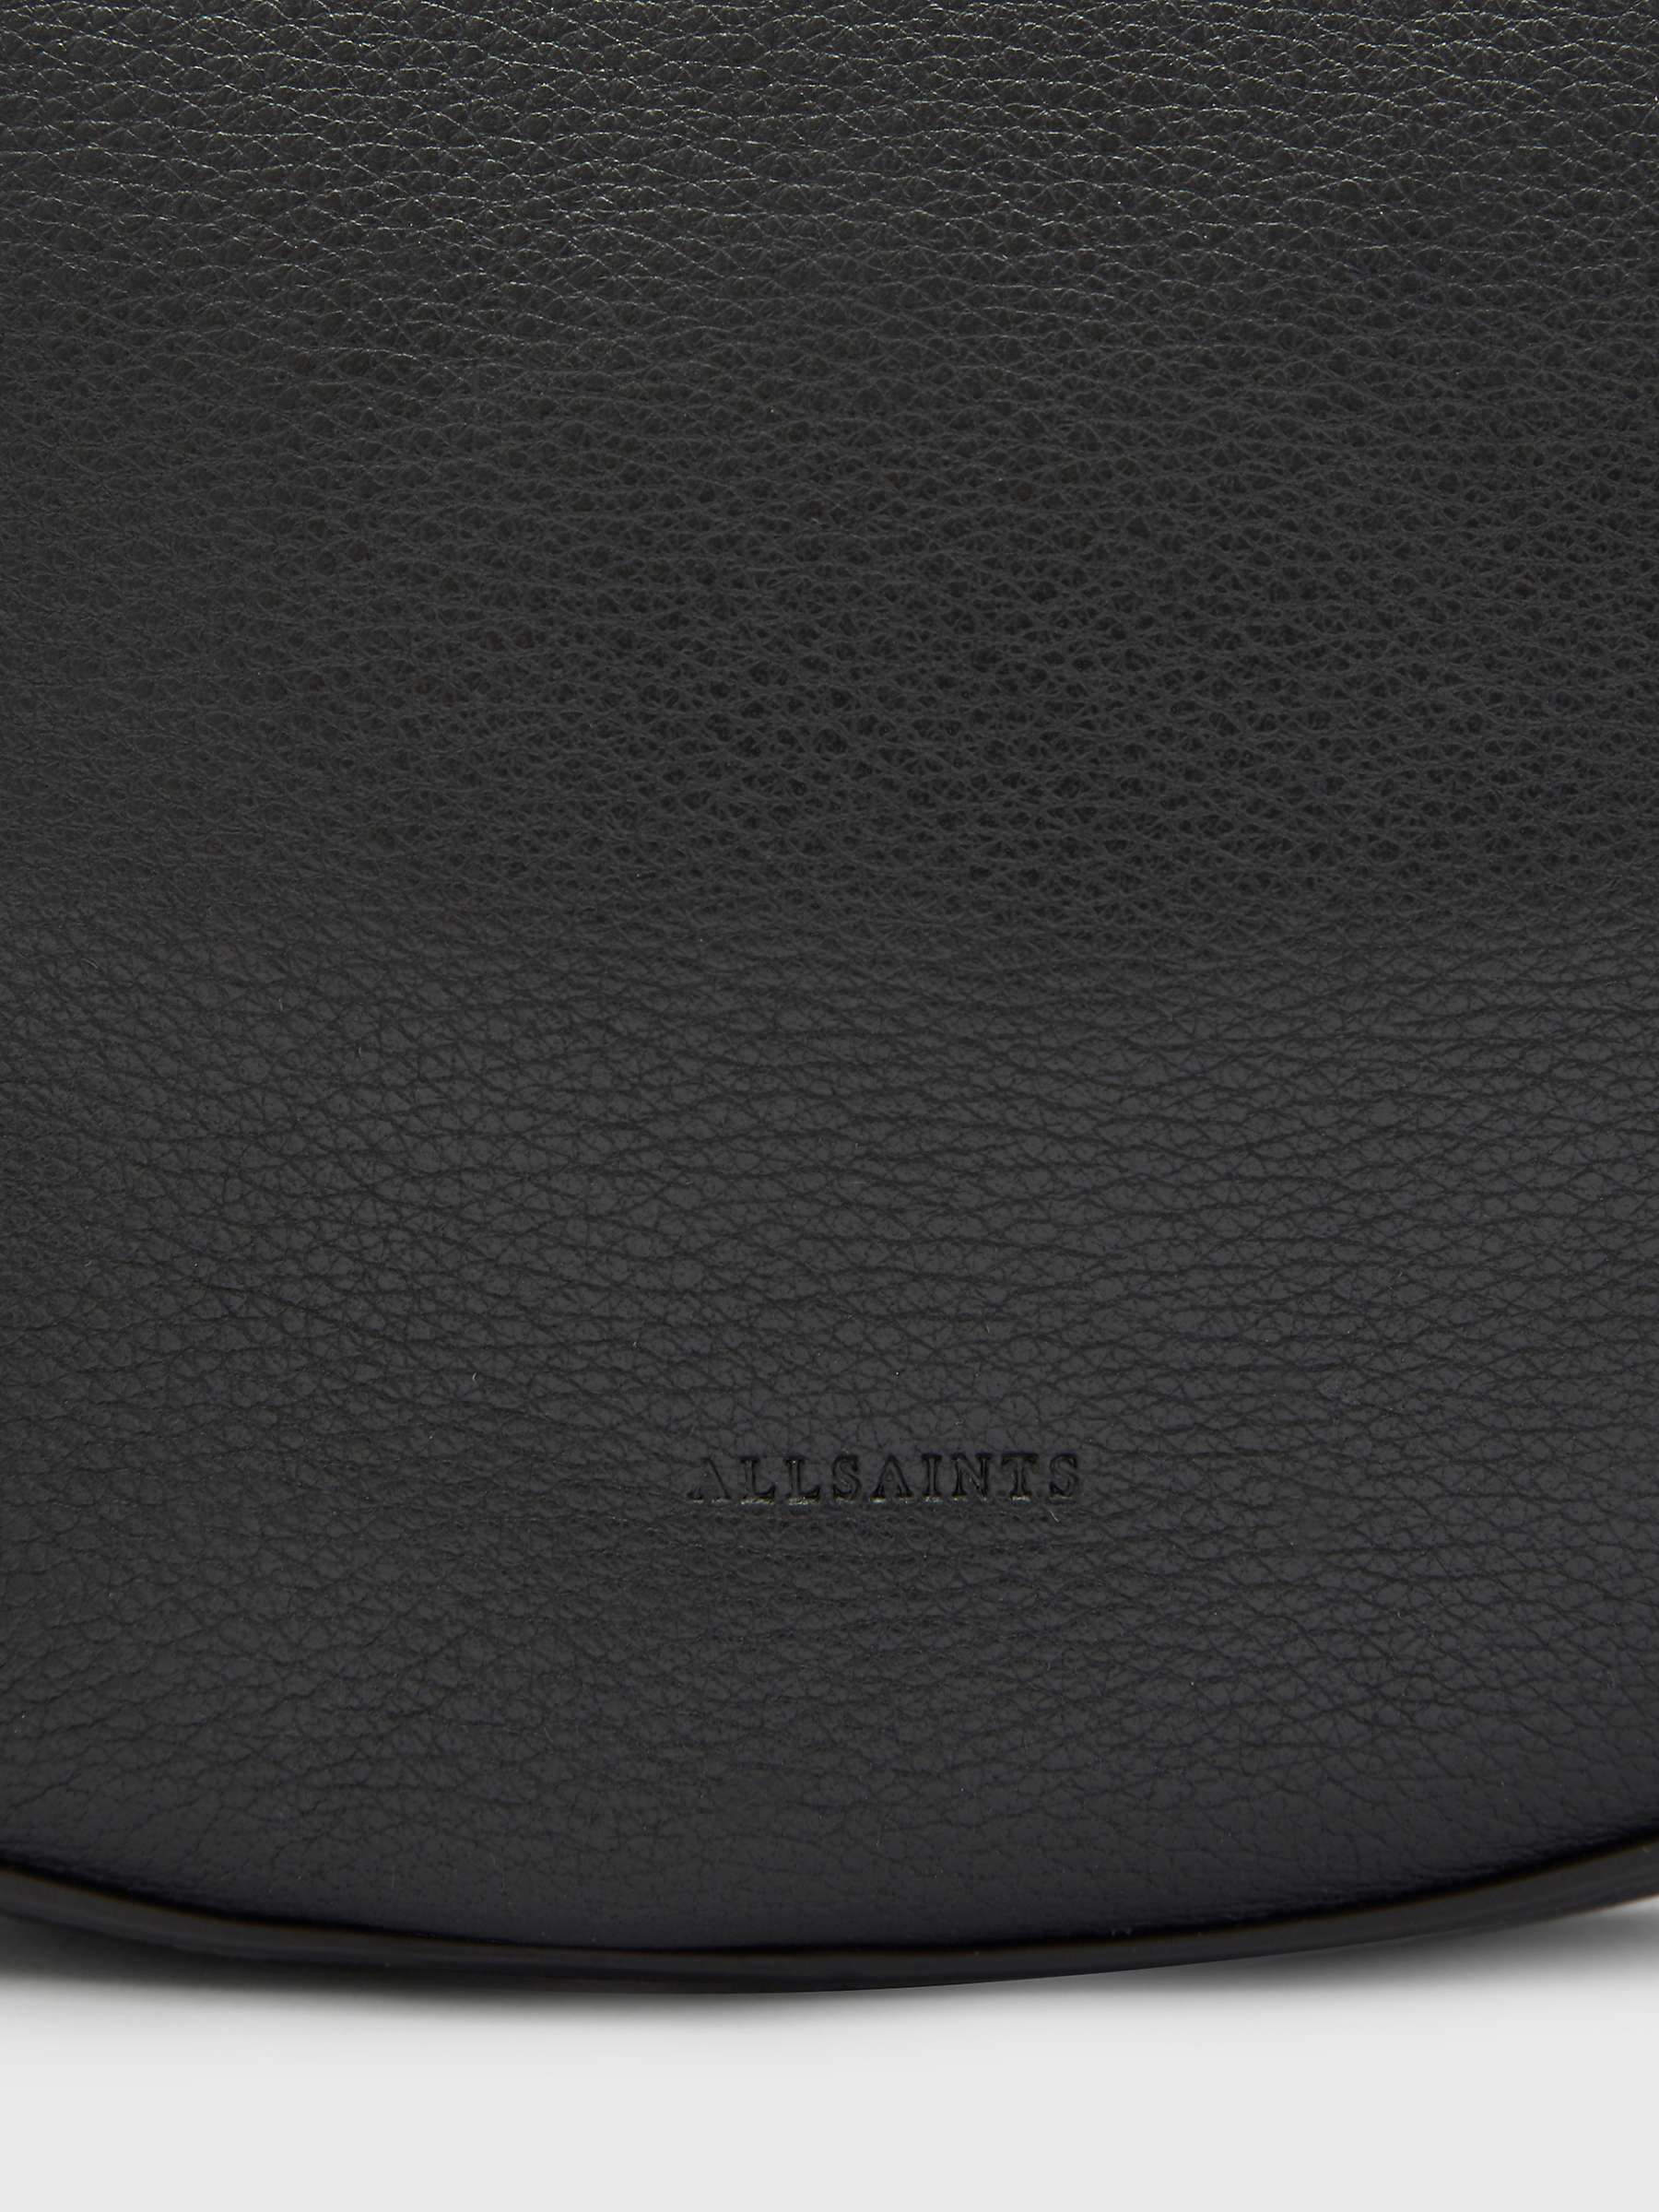 Buy AllSaints Half Moon Leather Cross Body Bag Online at johnlewis.com